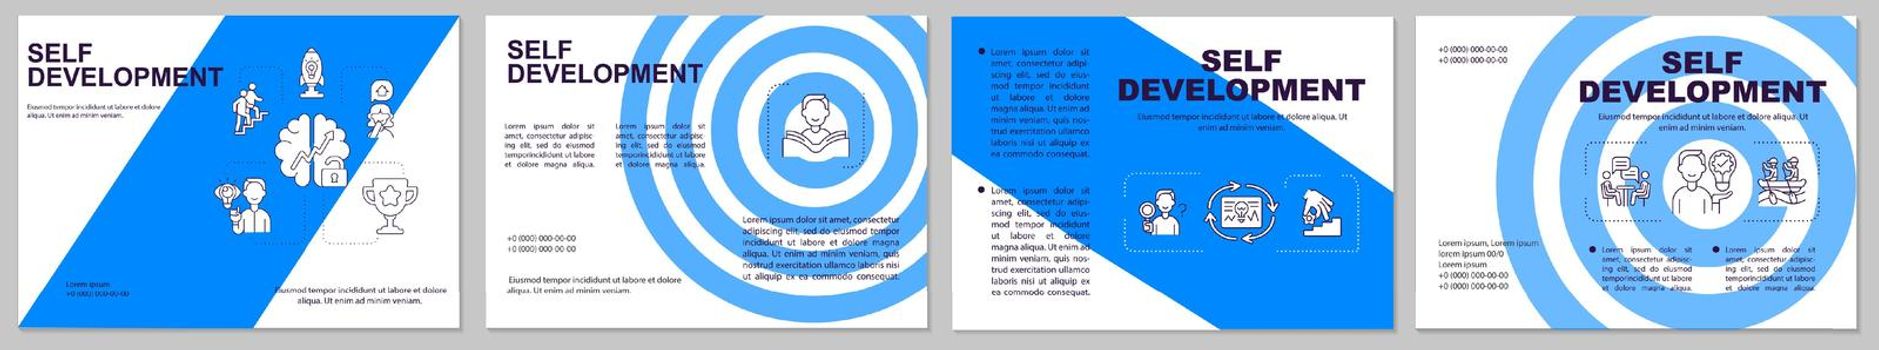 Self development brochure template